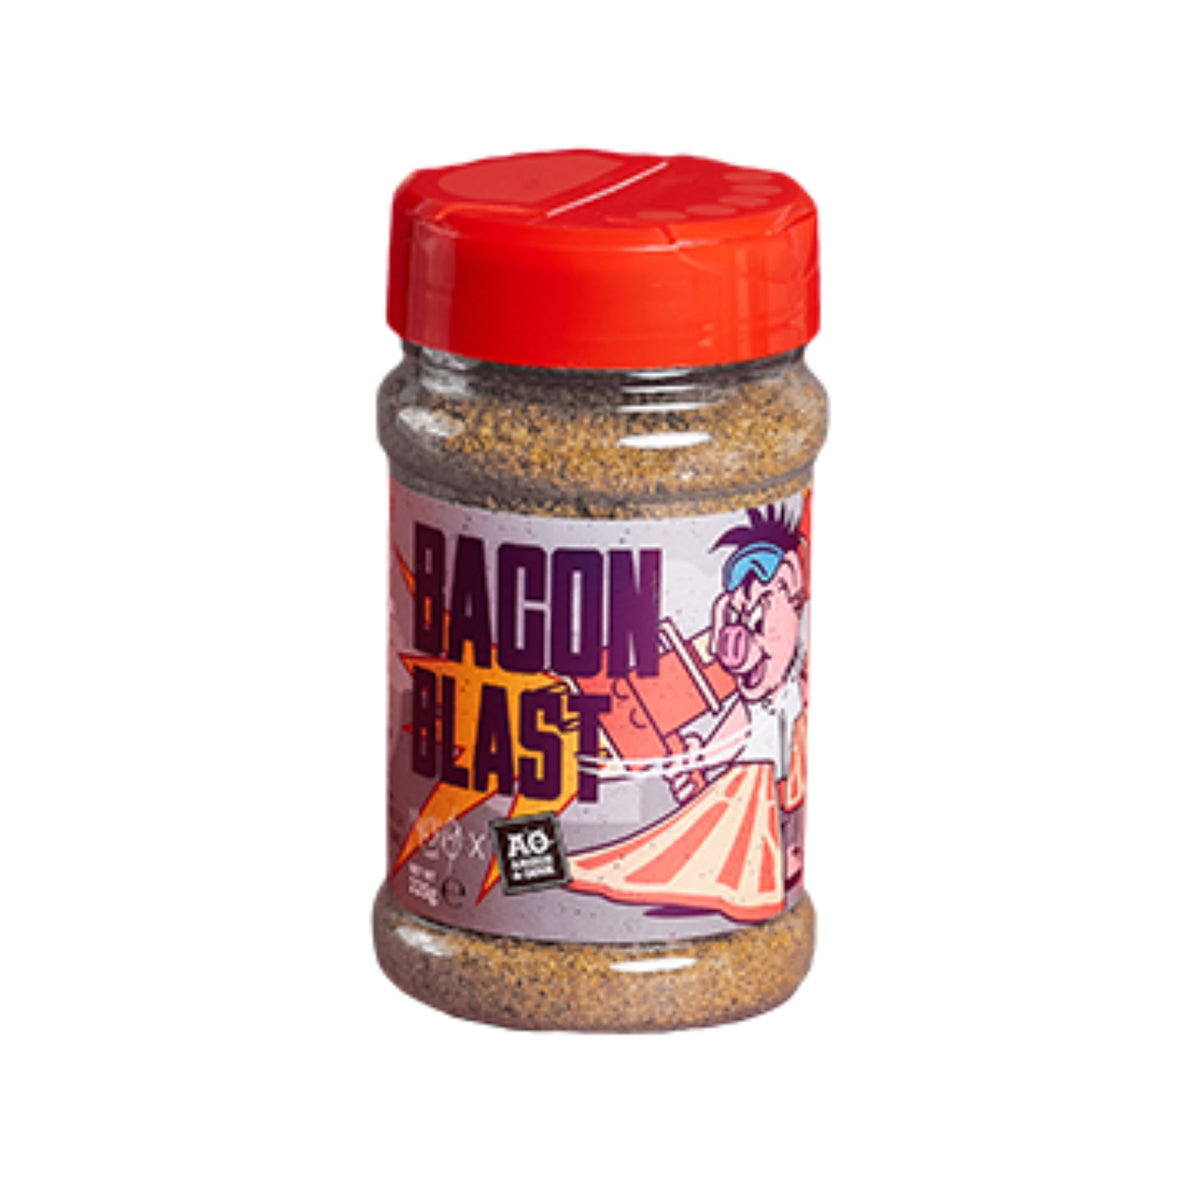 Angus & Oink Rub Me | Bacon Blast - Capolavoro di Mochohf